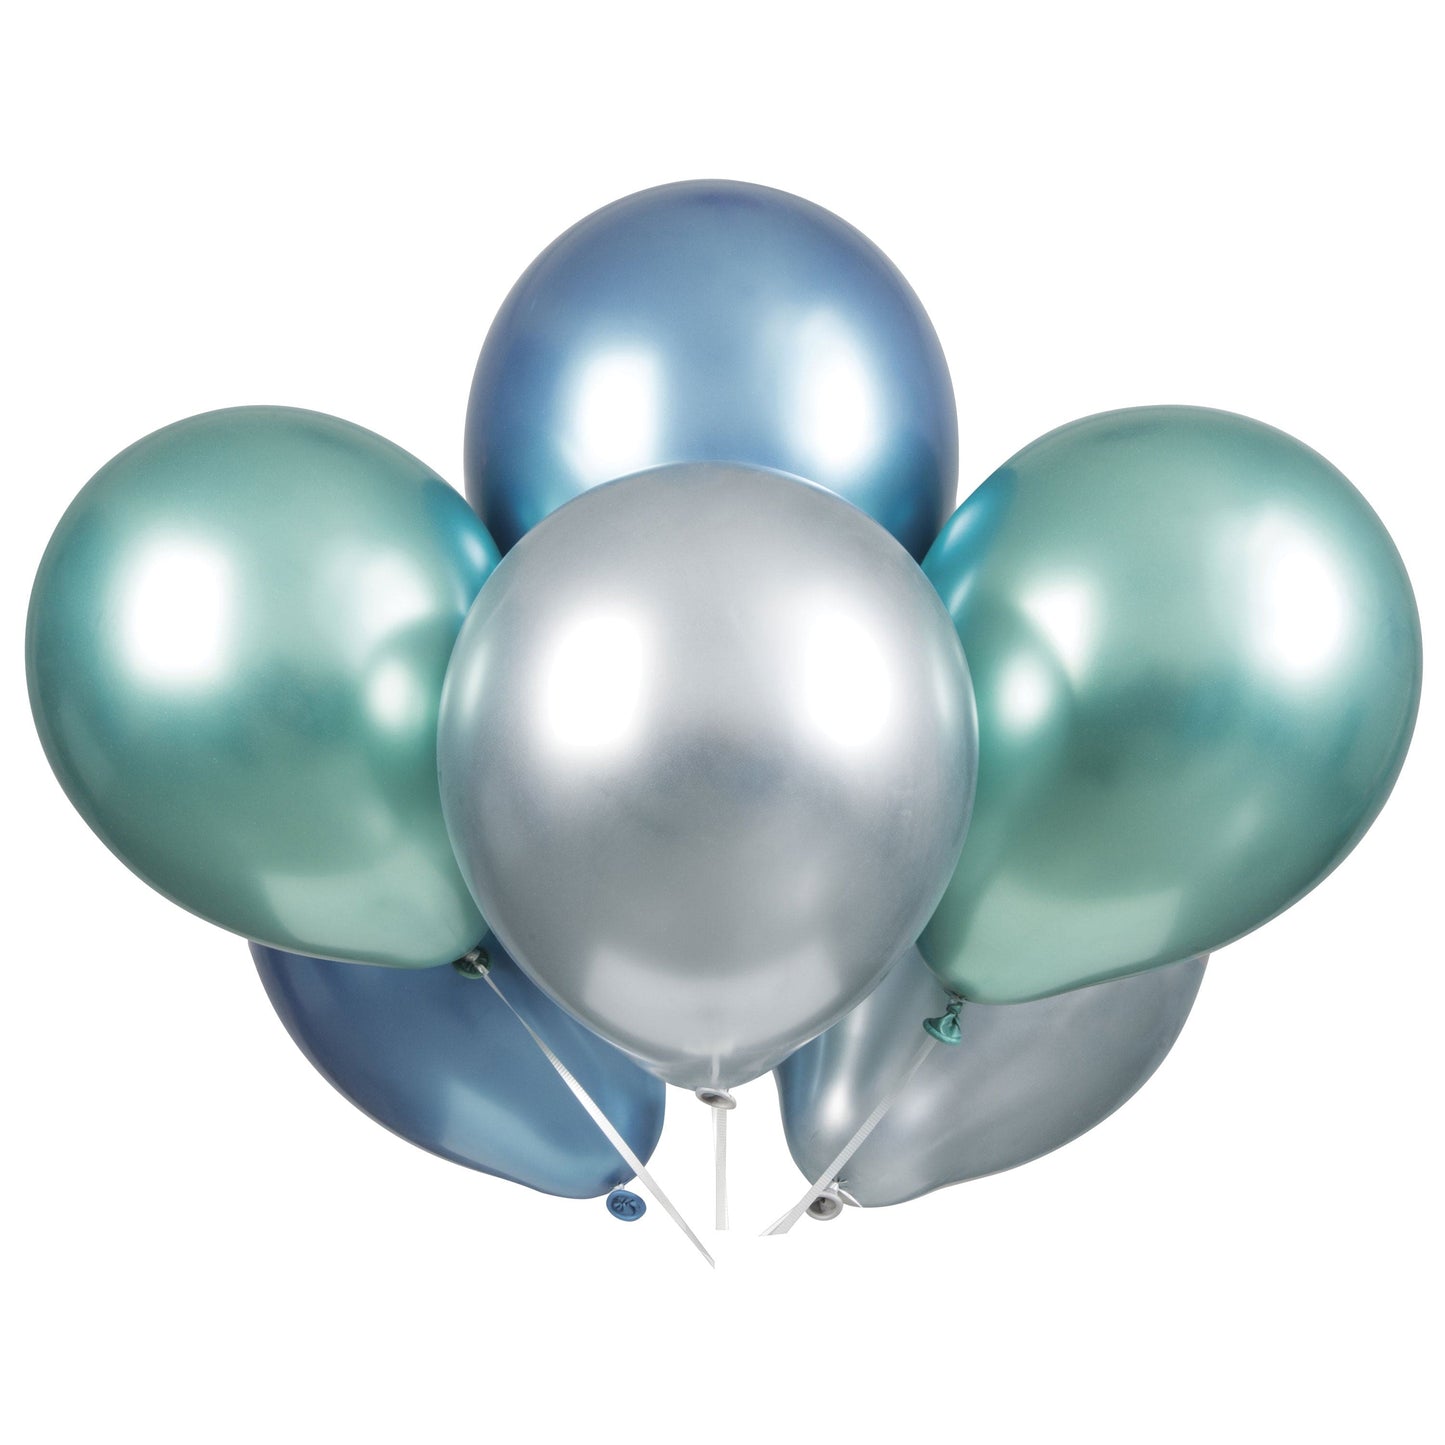 11" Chrome Latex Blue, Green, Silver Balloons 6 ct.